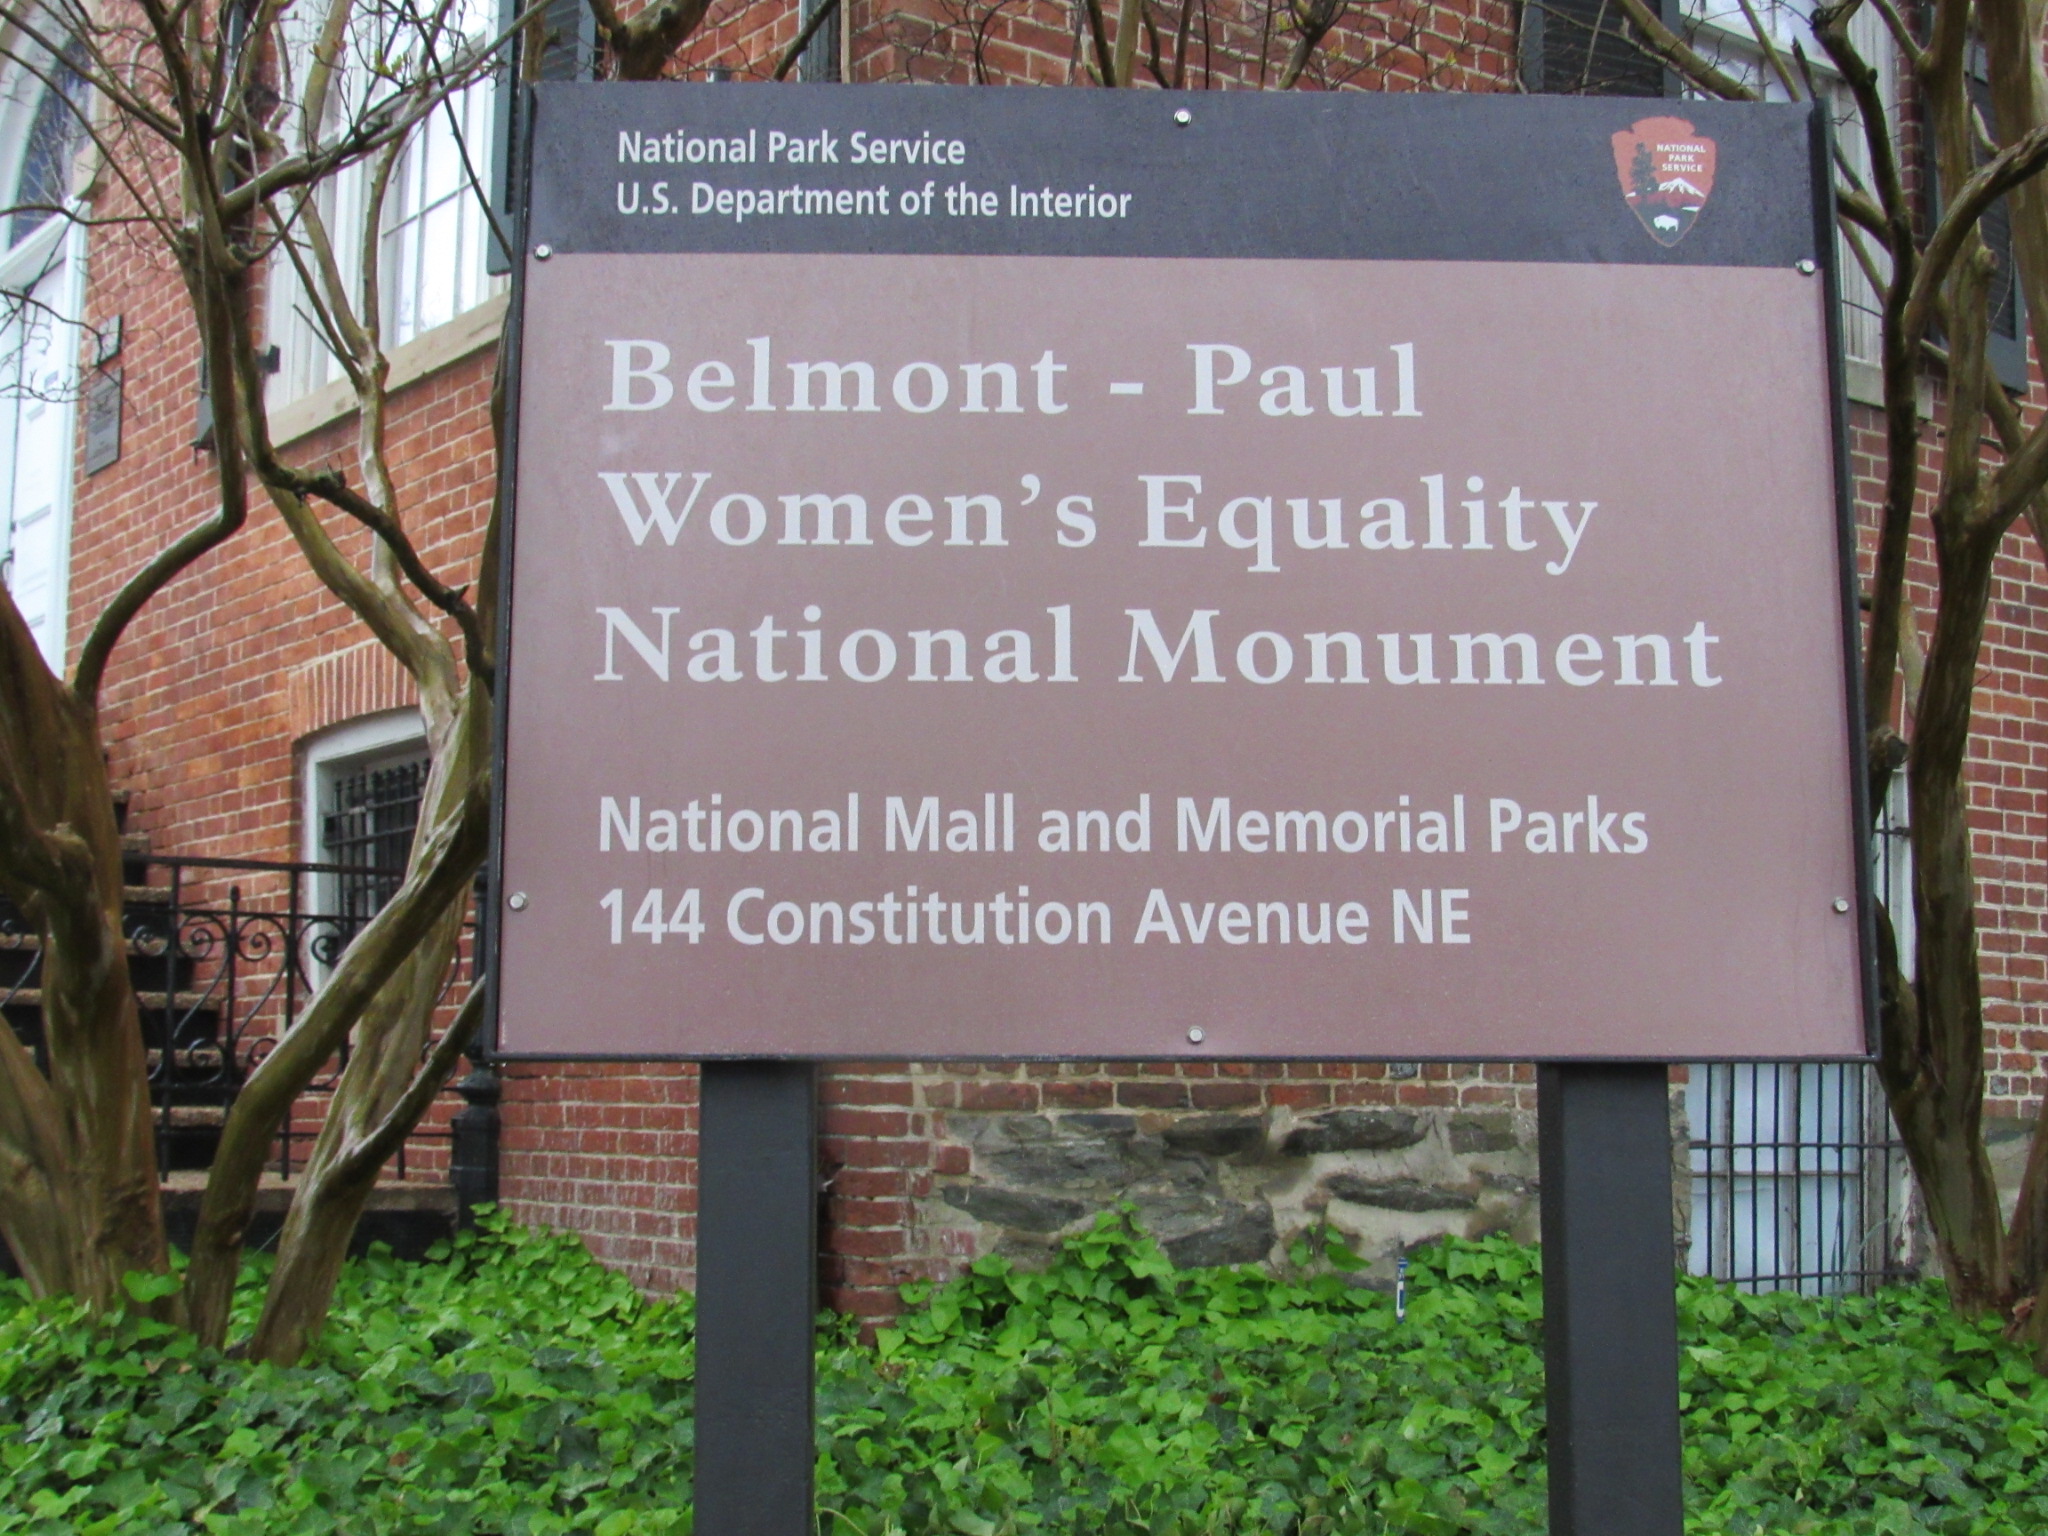 Belmont-Paul National Monument